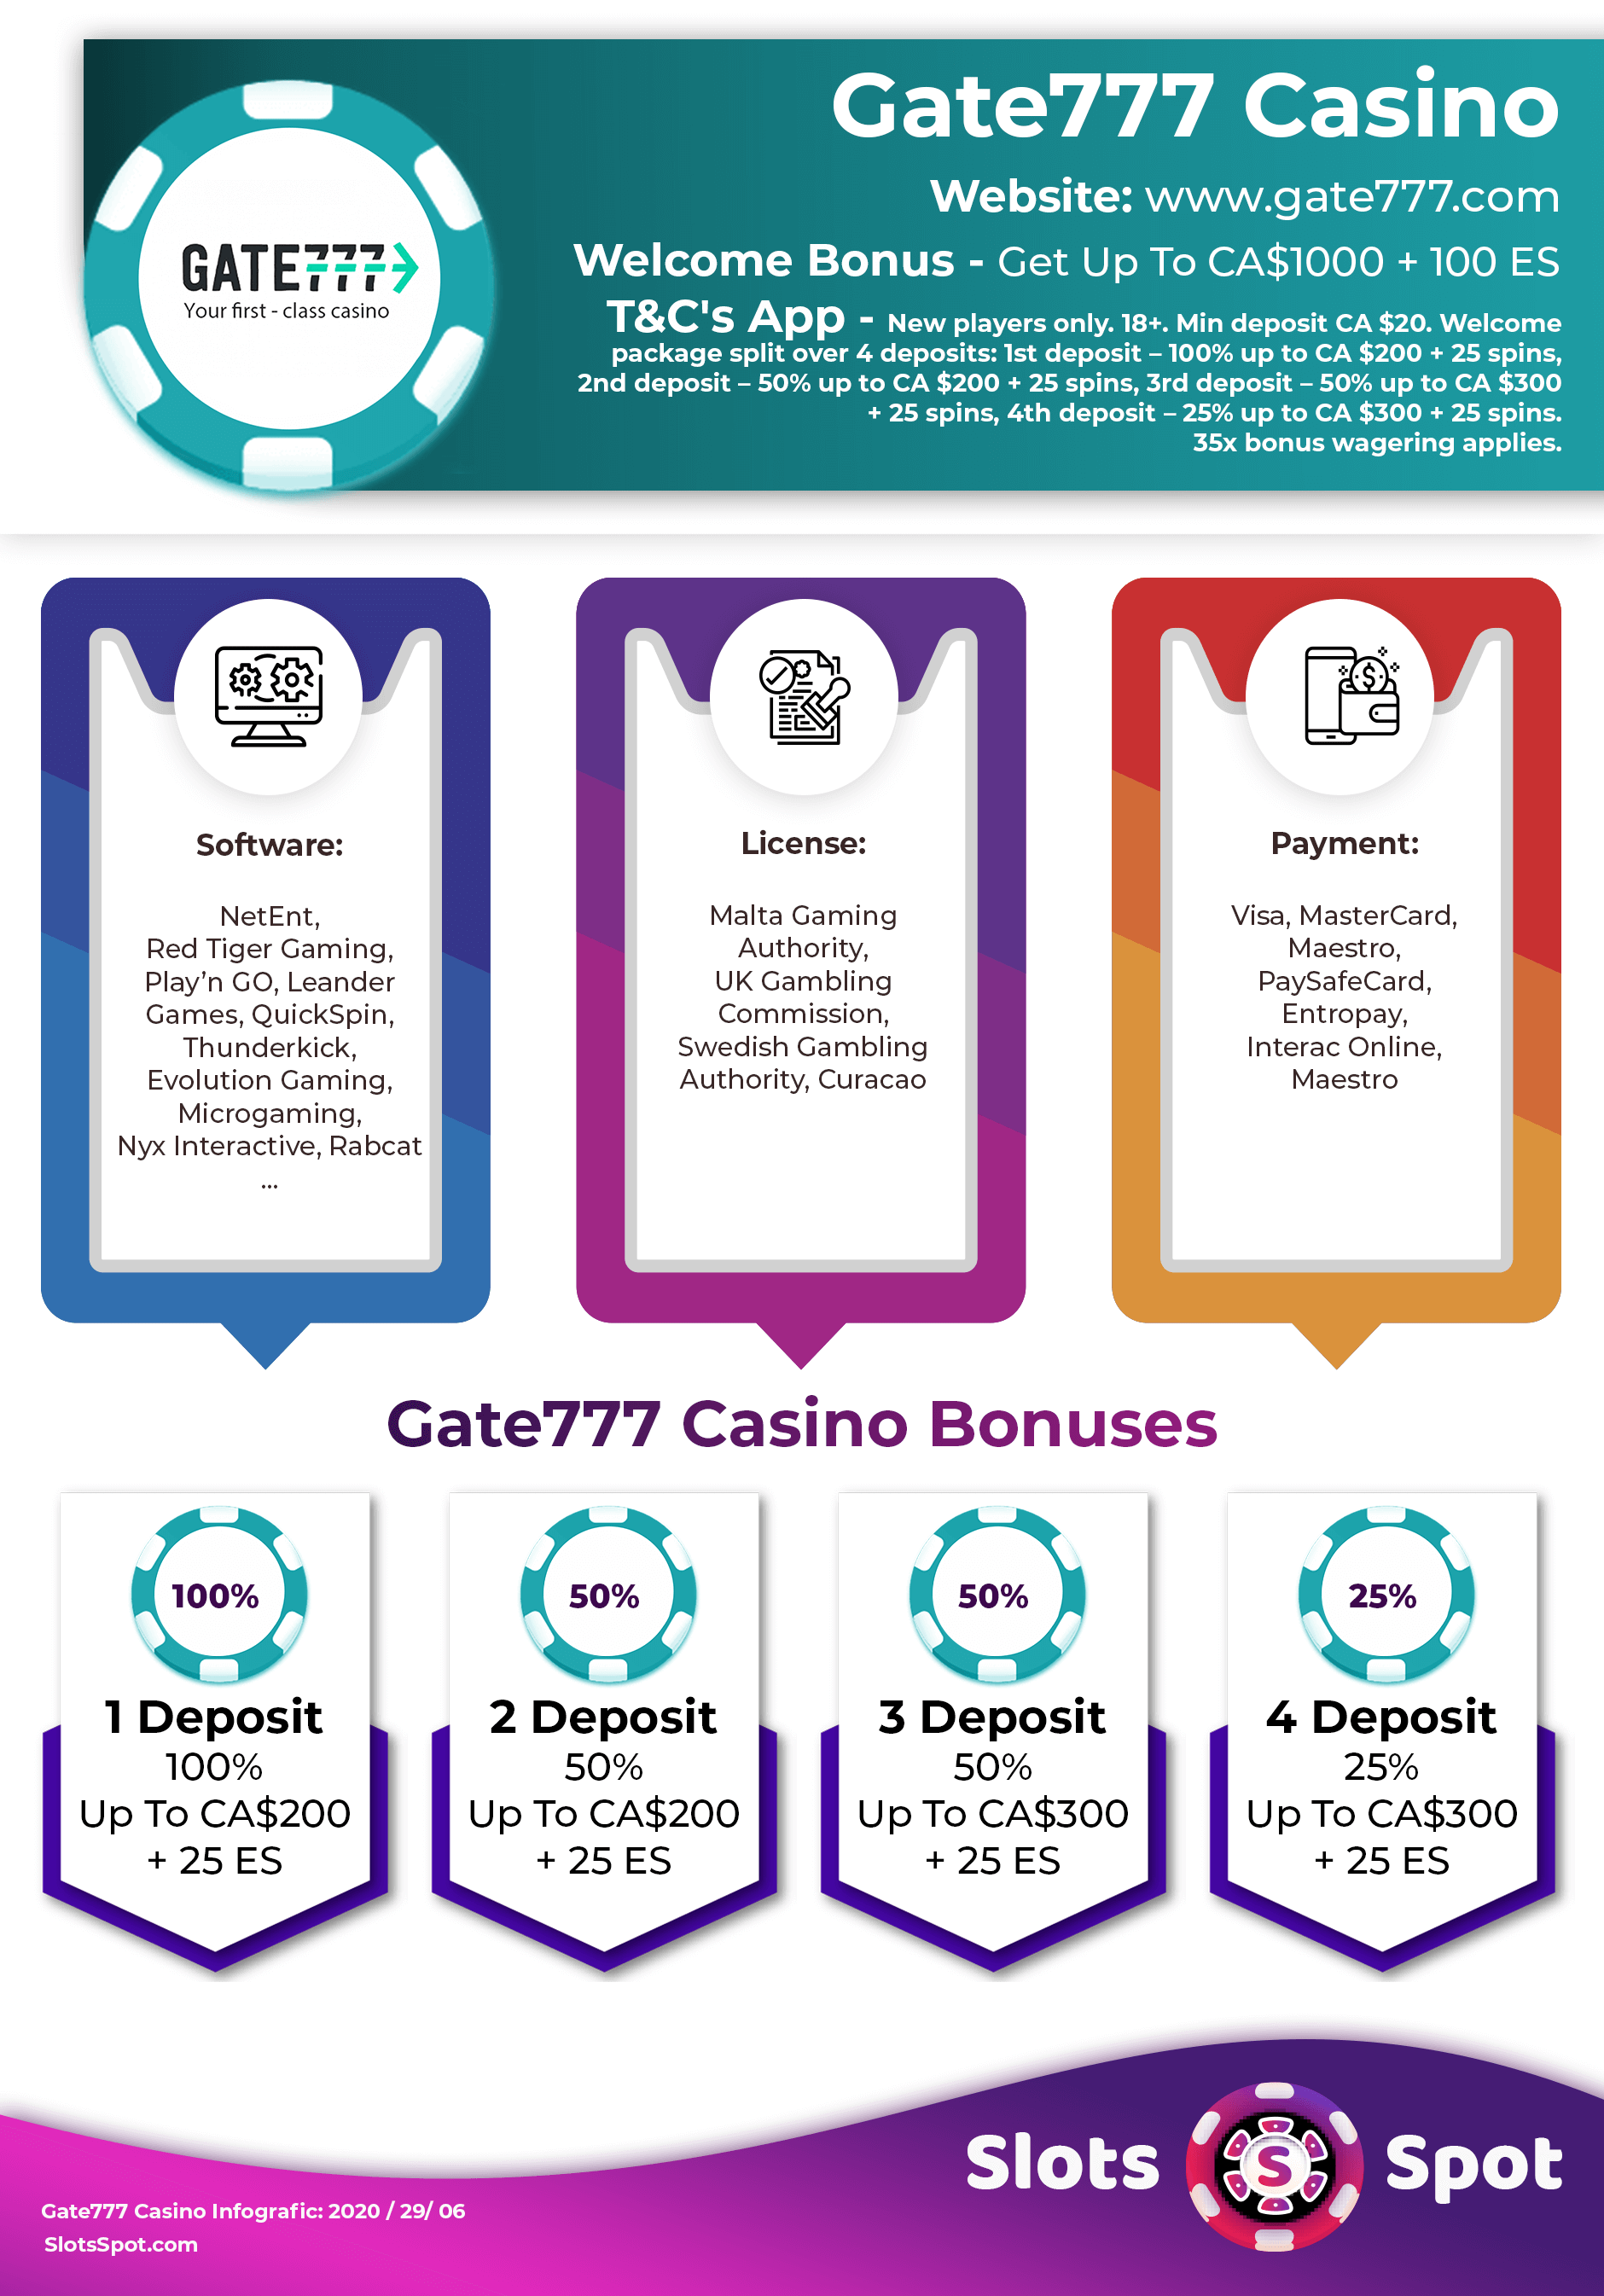 10bet casino free spins